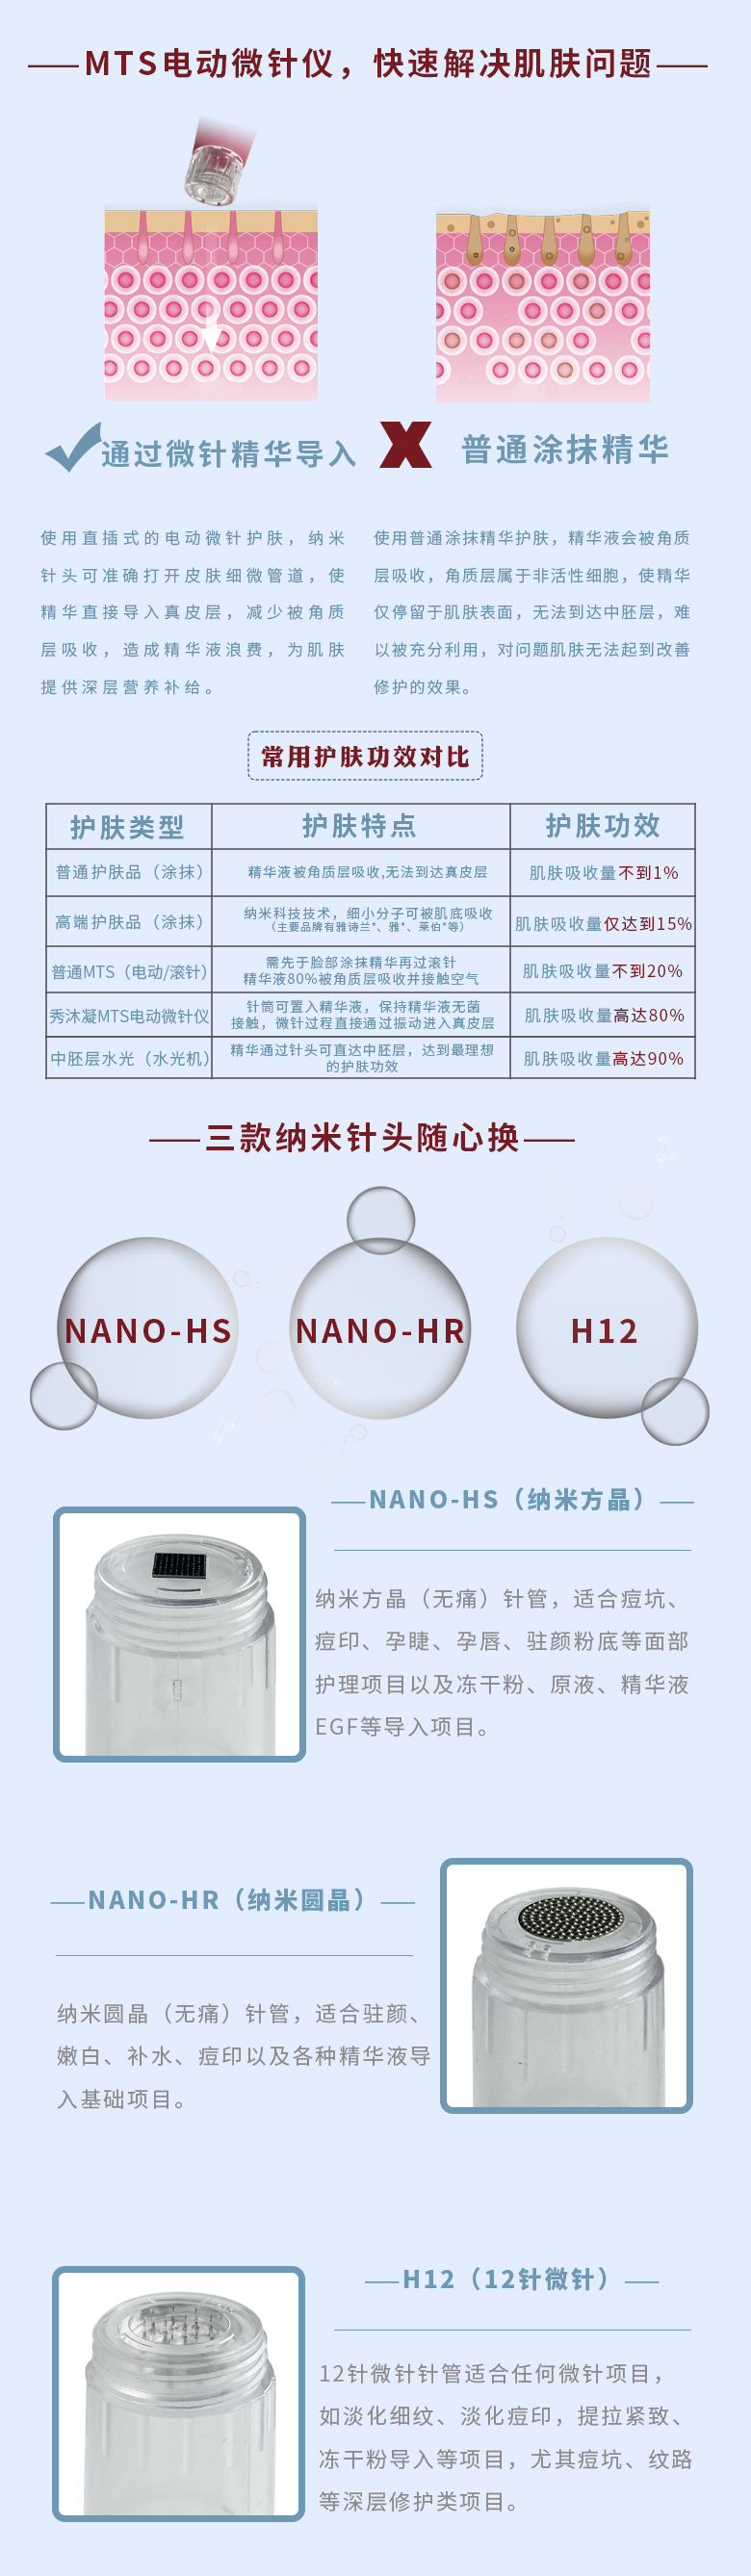 Instrument à micro-aiguille électrique Therapeel Xiu Mu Ning MTS : -3